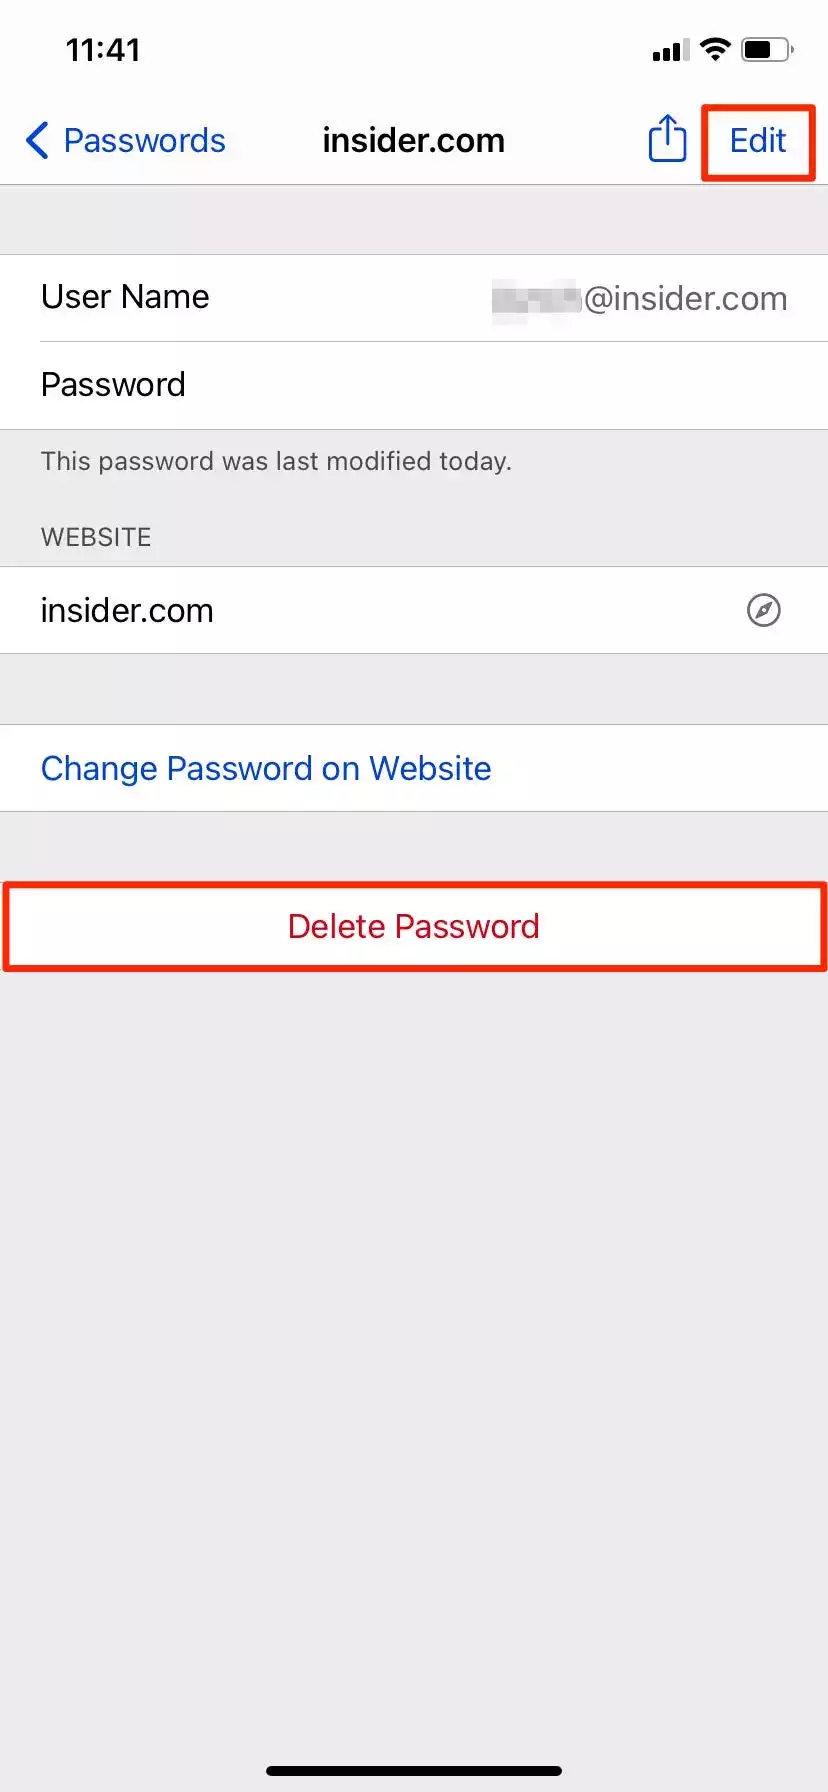 iCloud 钥匙串：如何启用和使用 Apple 系统在您的设备上存储密码和信用卡